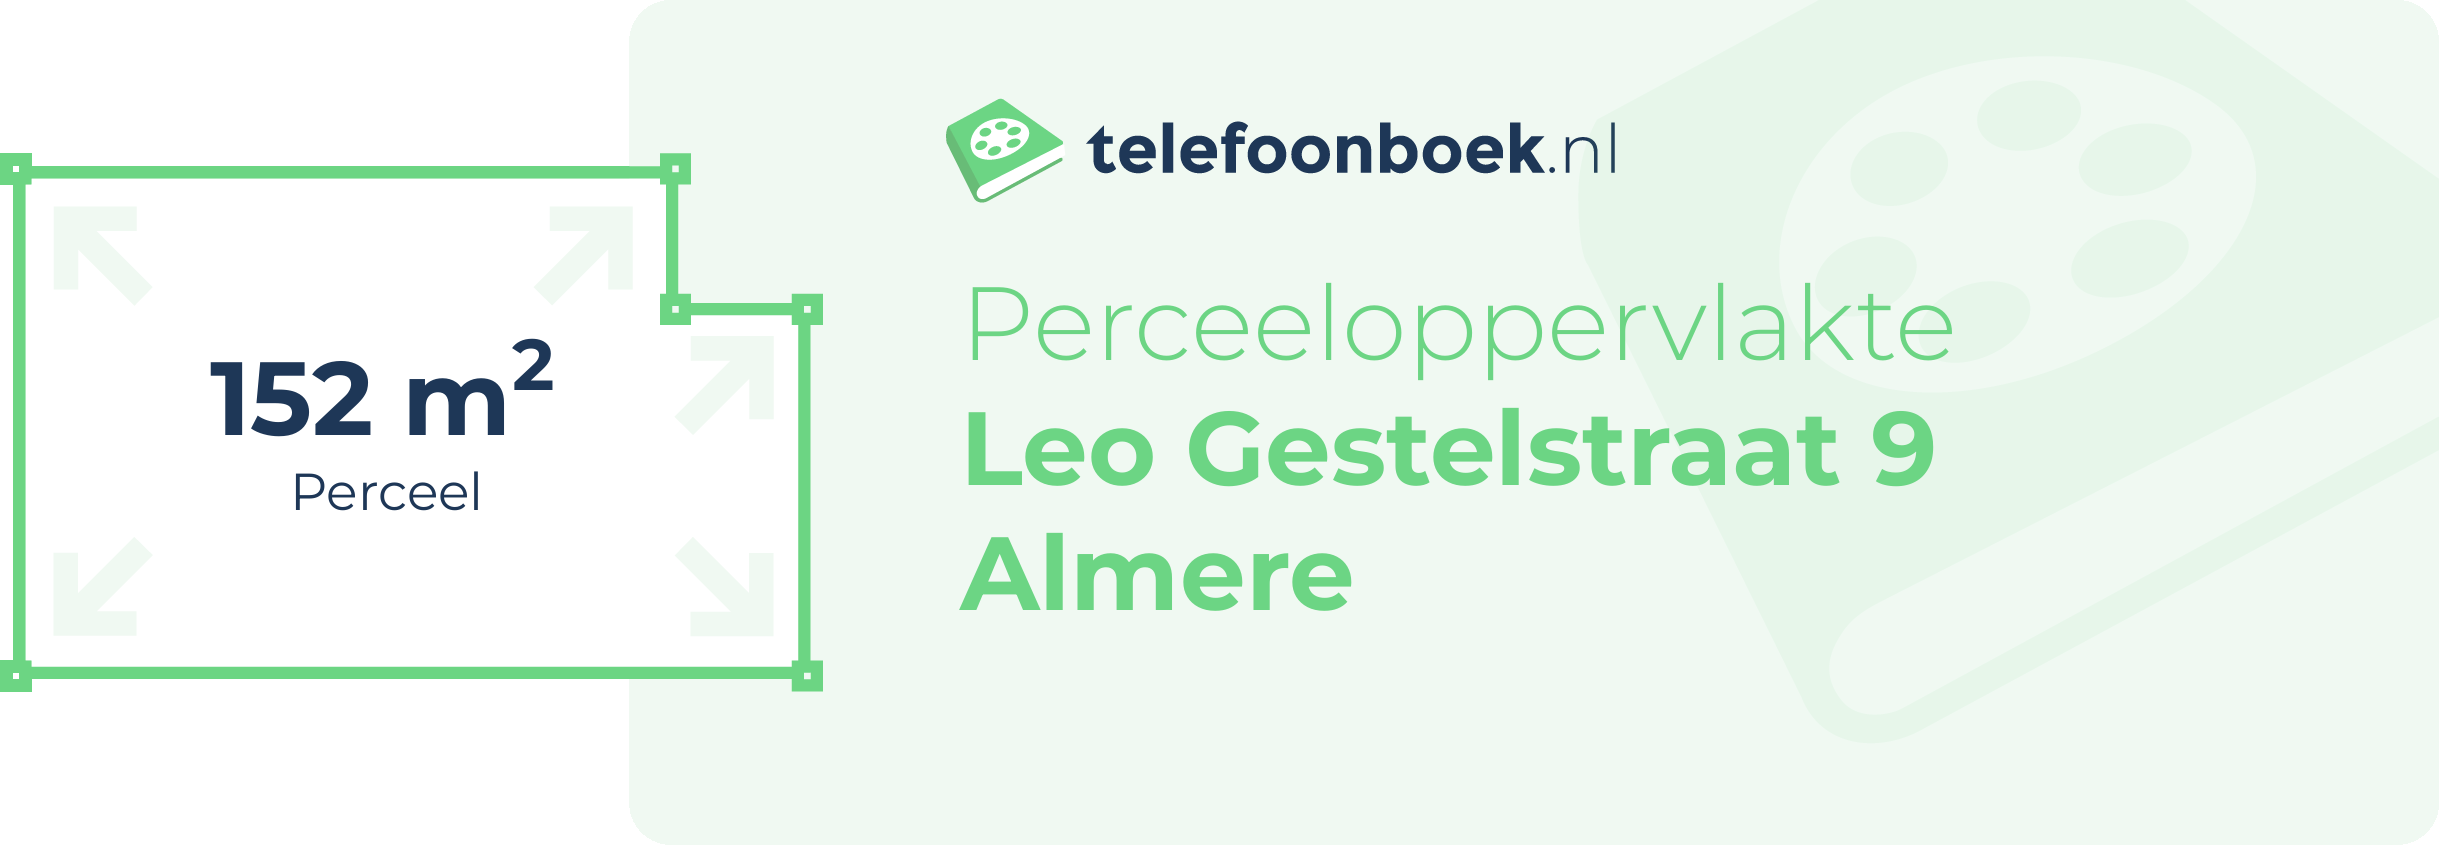 Perceeloppervlakte Leo Gestelstraat 9 Almere